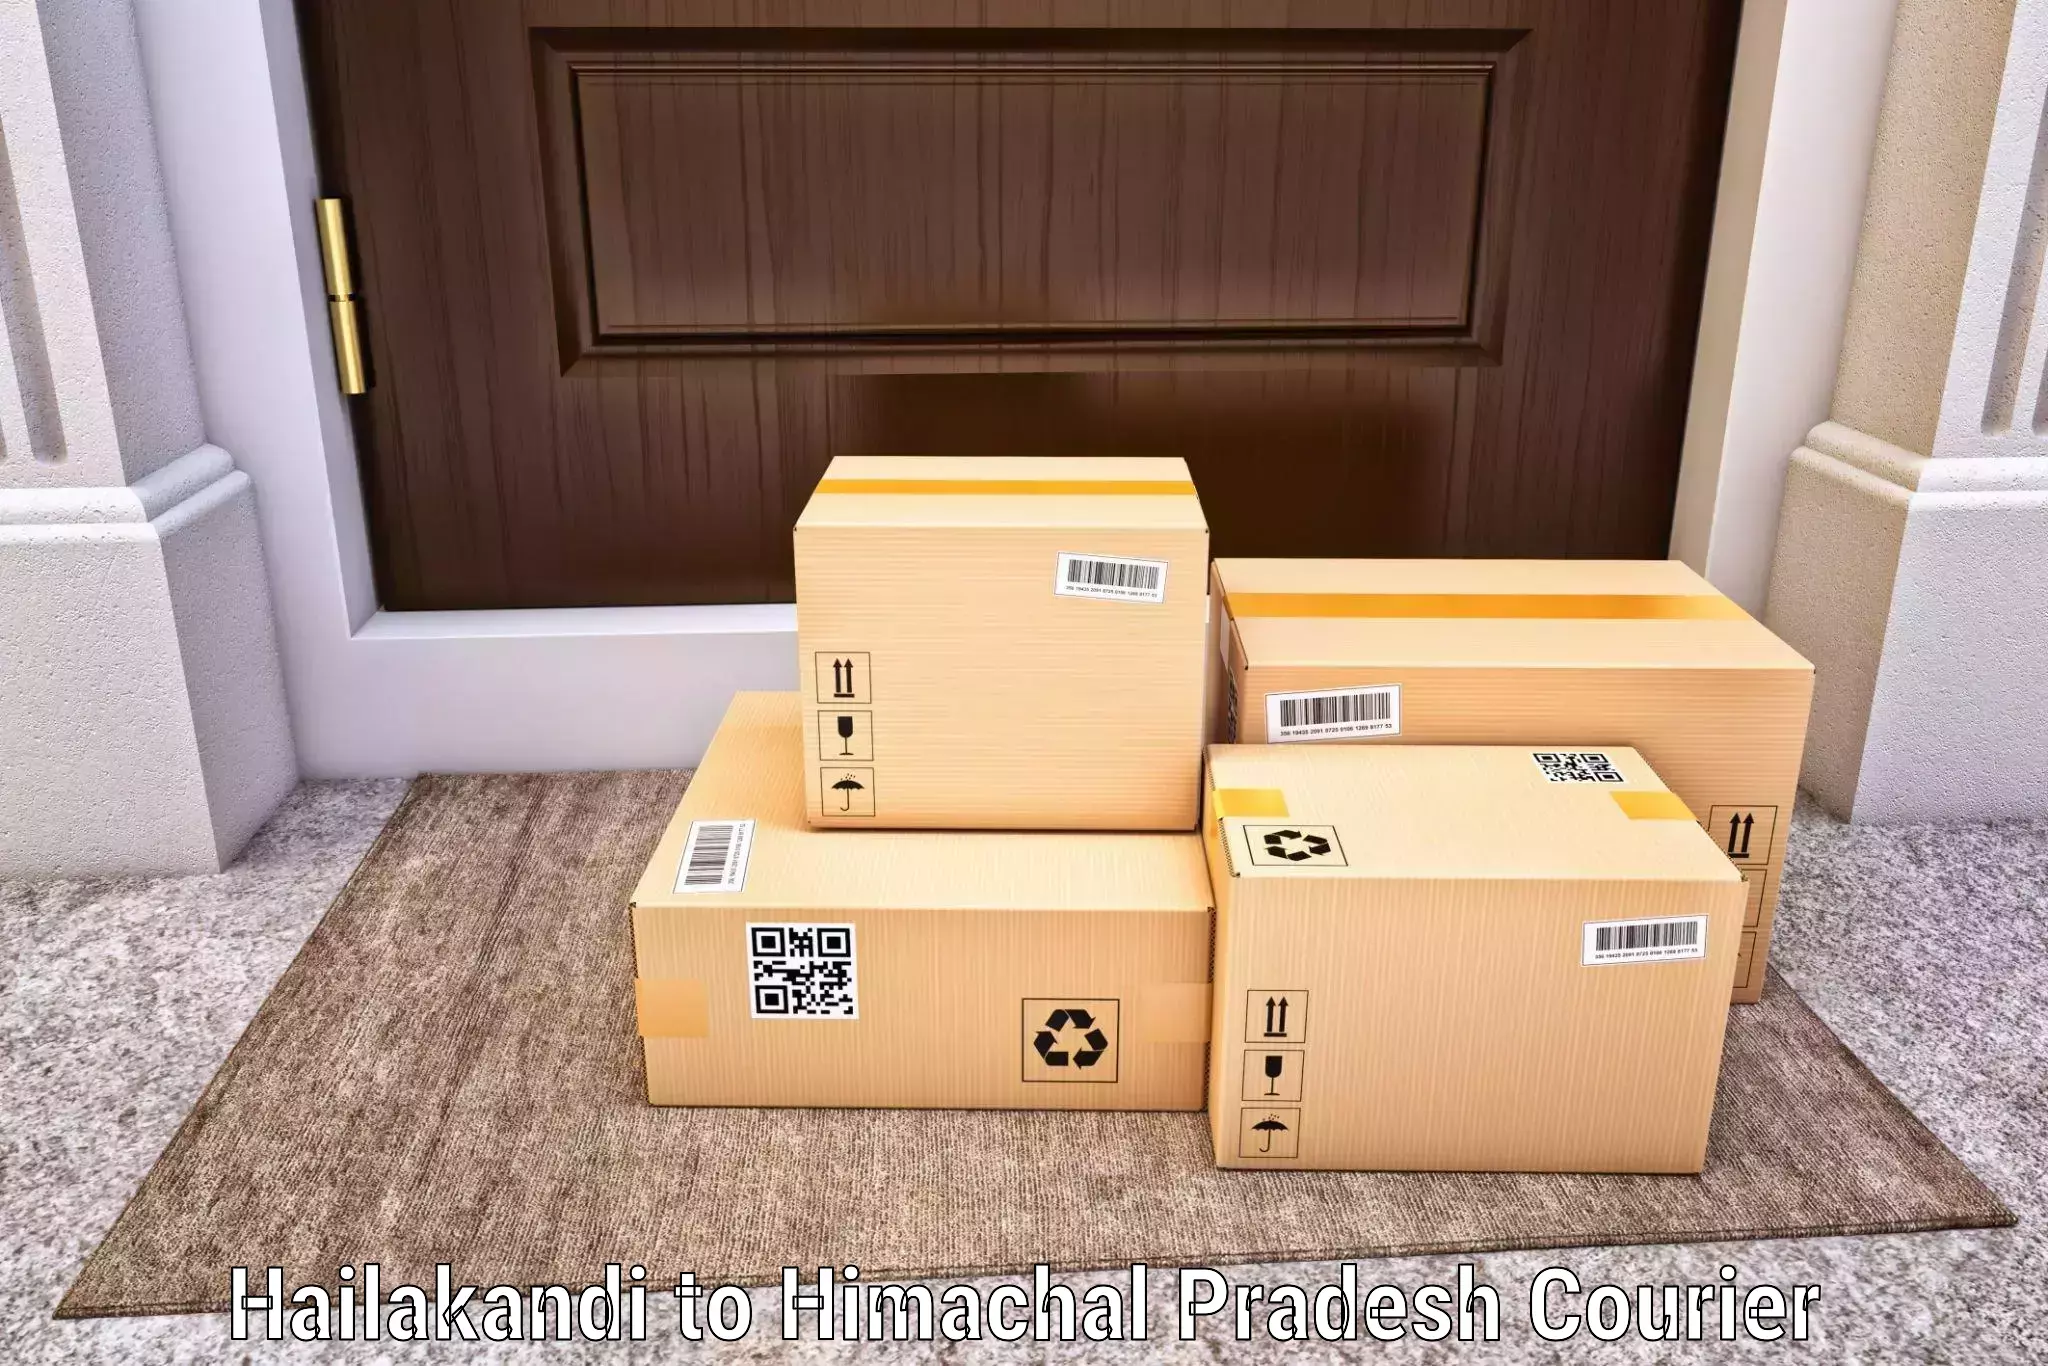 Package delivery network Hailakandi to Kyelang